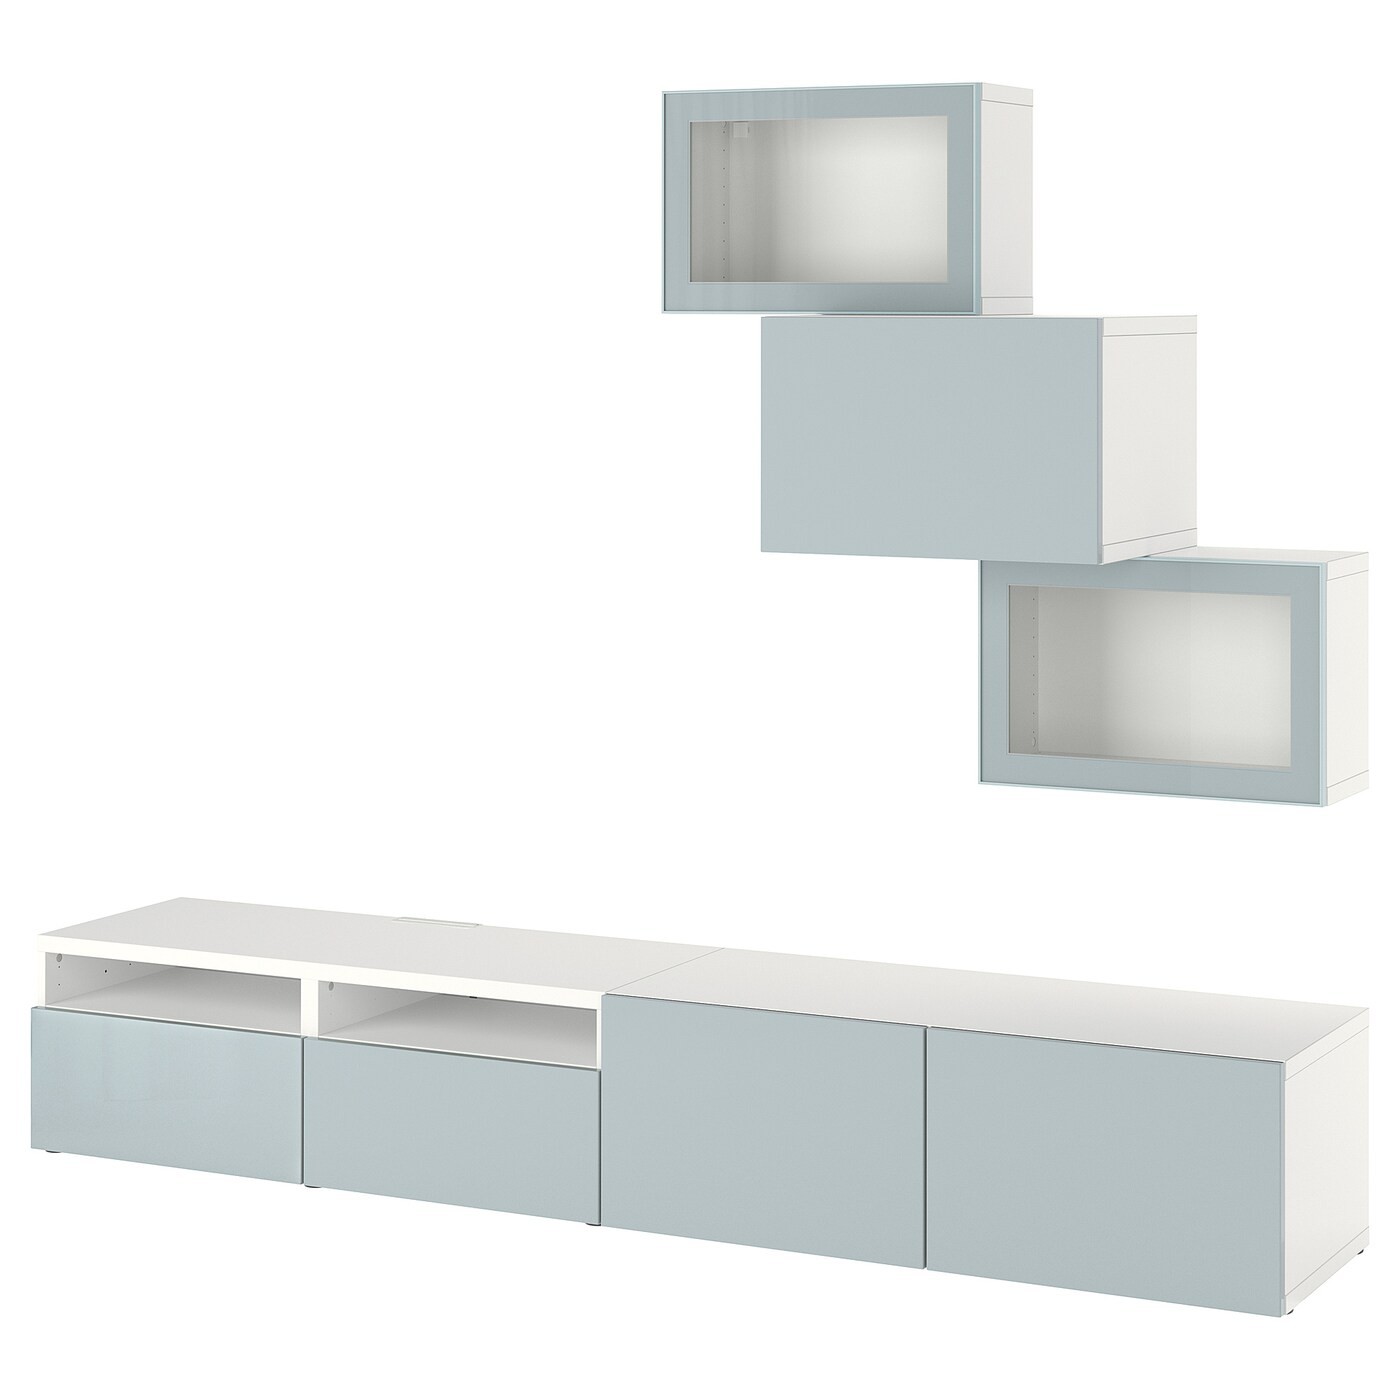 IKEA BESTÅ БЕСТО Комбинация для ТВ / стеклянные двери, белый Glassvik / Selsviken светло-серо-голубой, 240x42x190 см 79436513 794.365.13